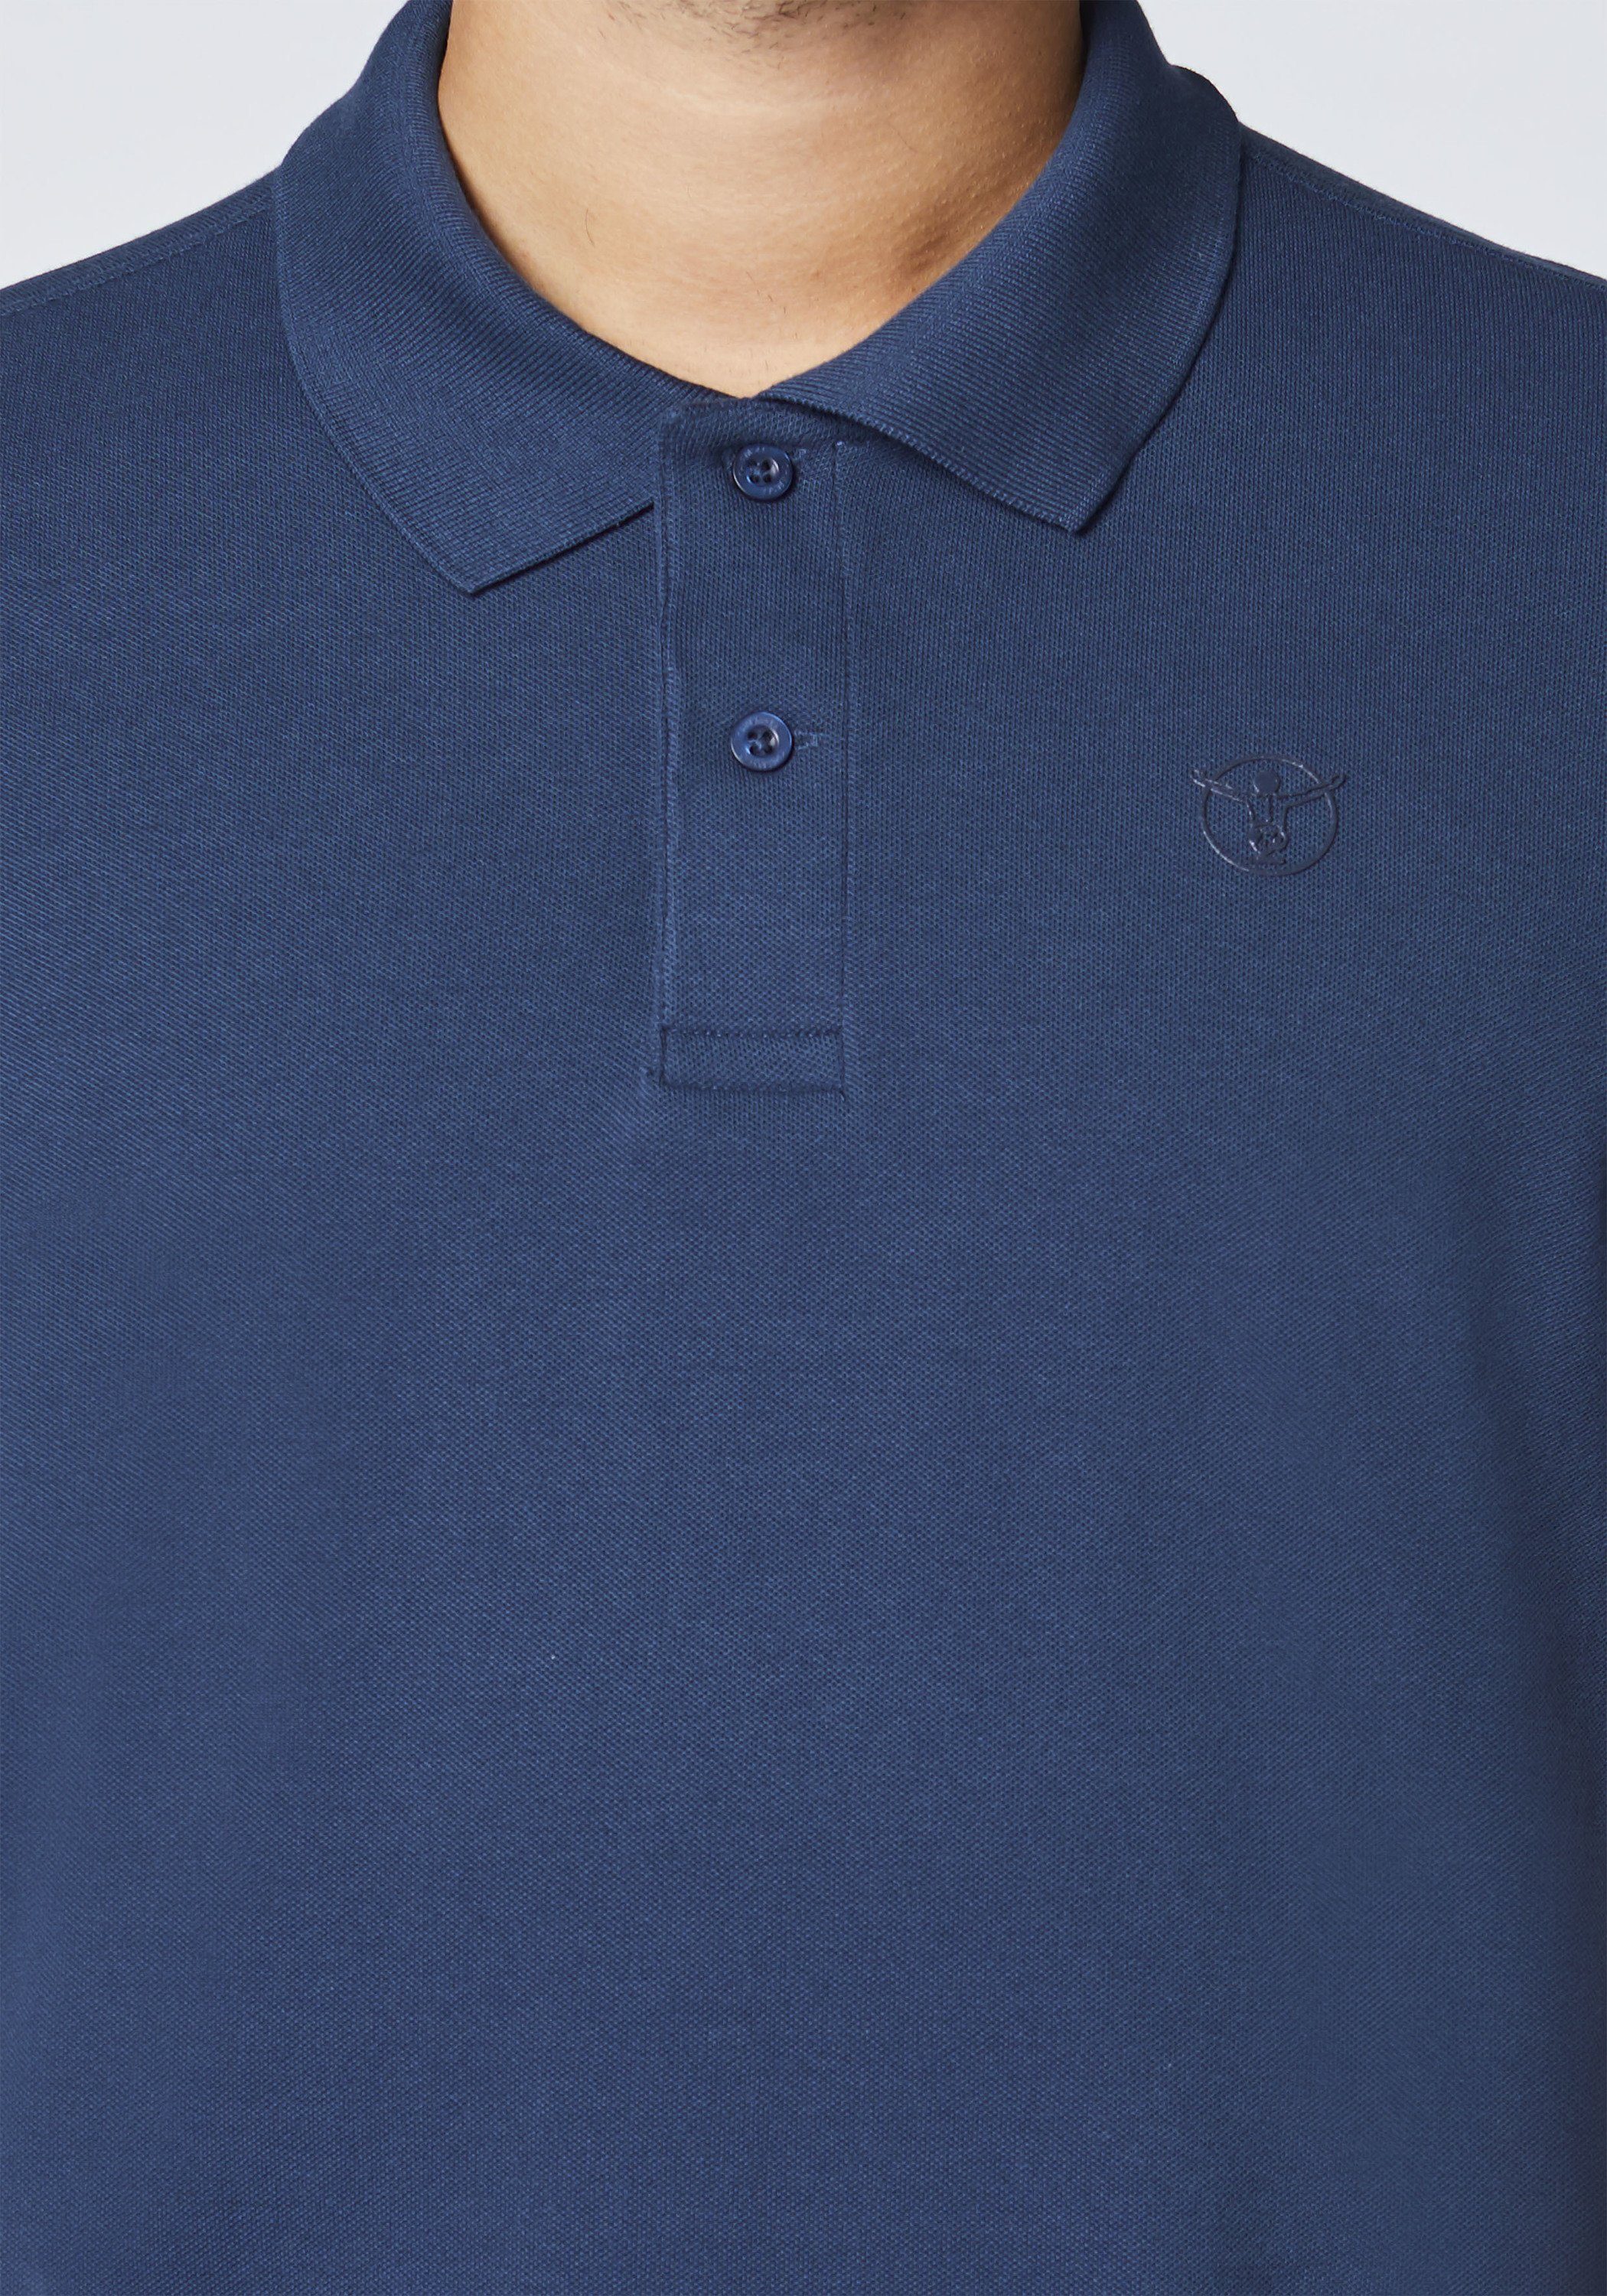 dunkel Poloshirt 1 blau mit Chiemsee dezentem Jumper-Motiv Poloshirt